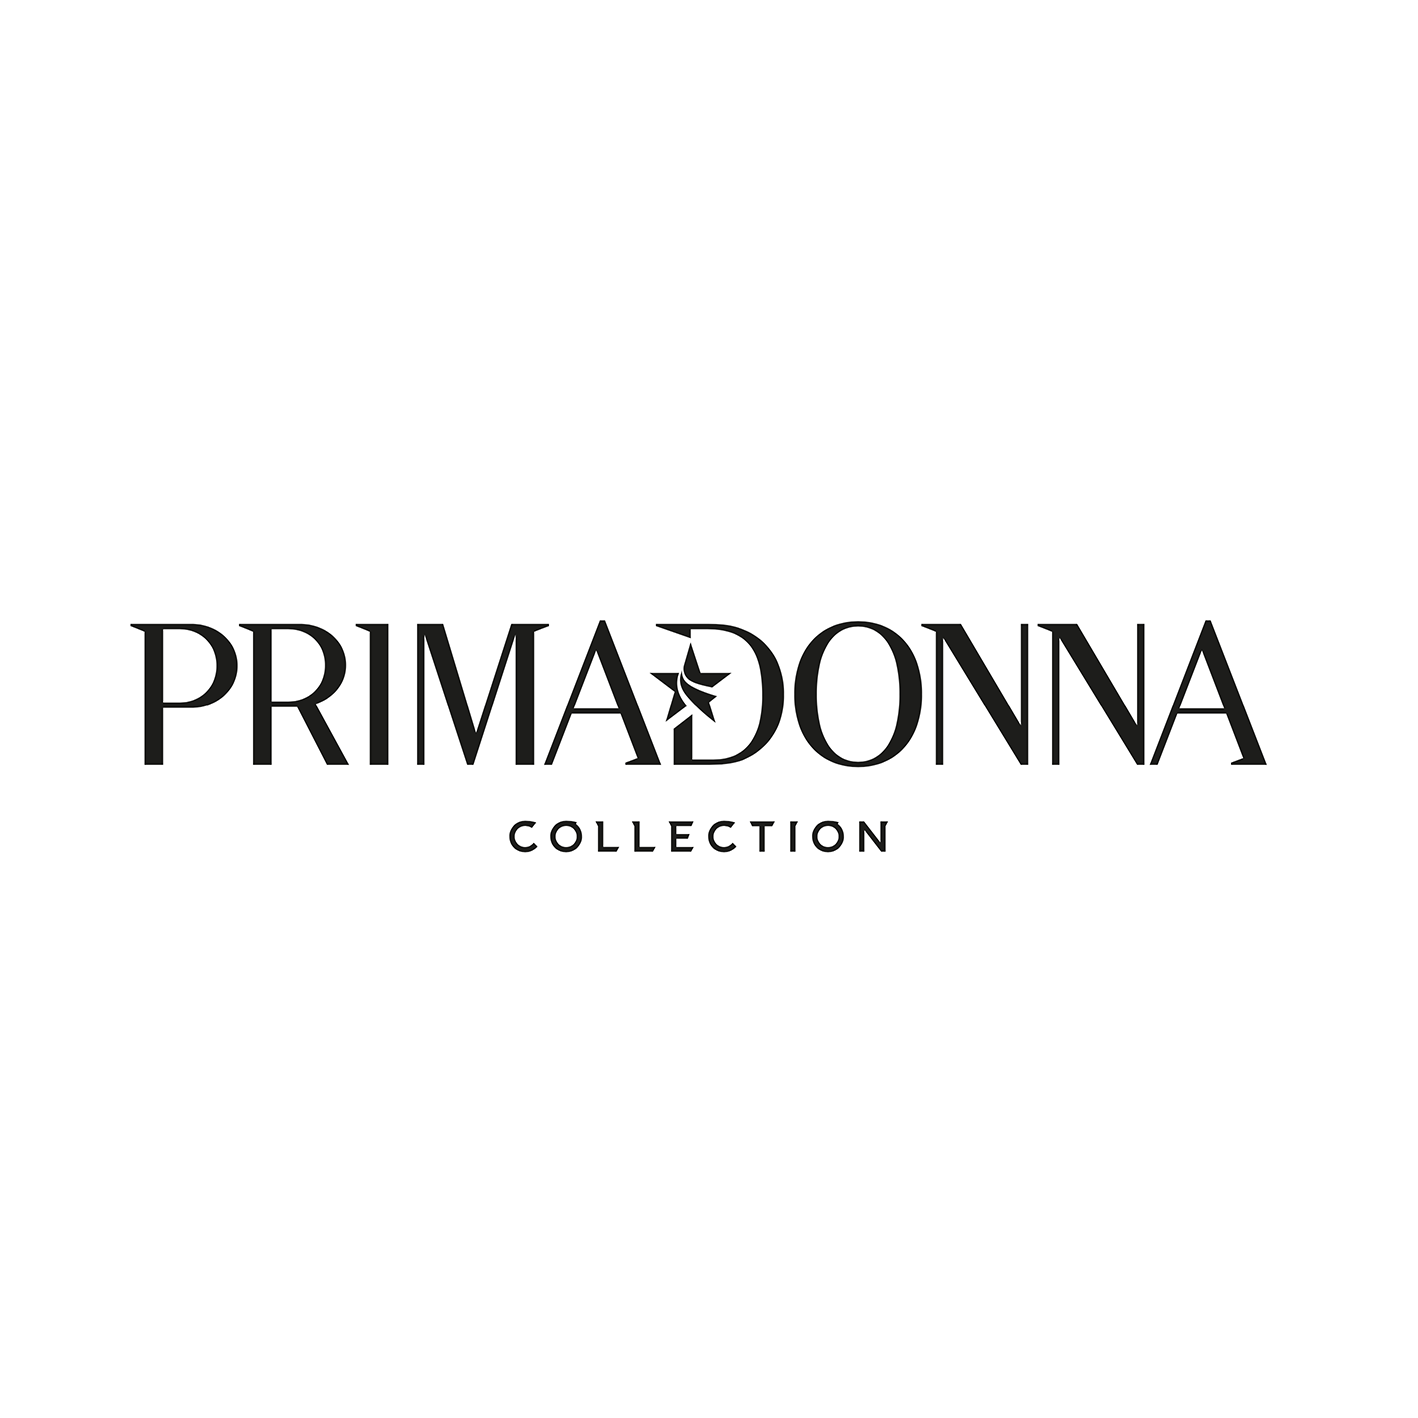 Primadonna logo